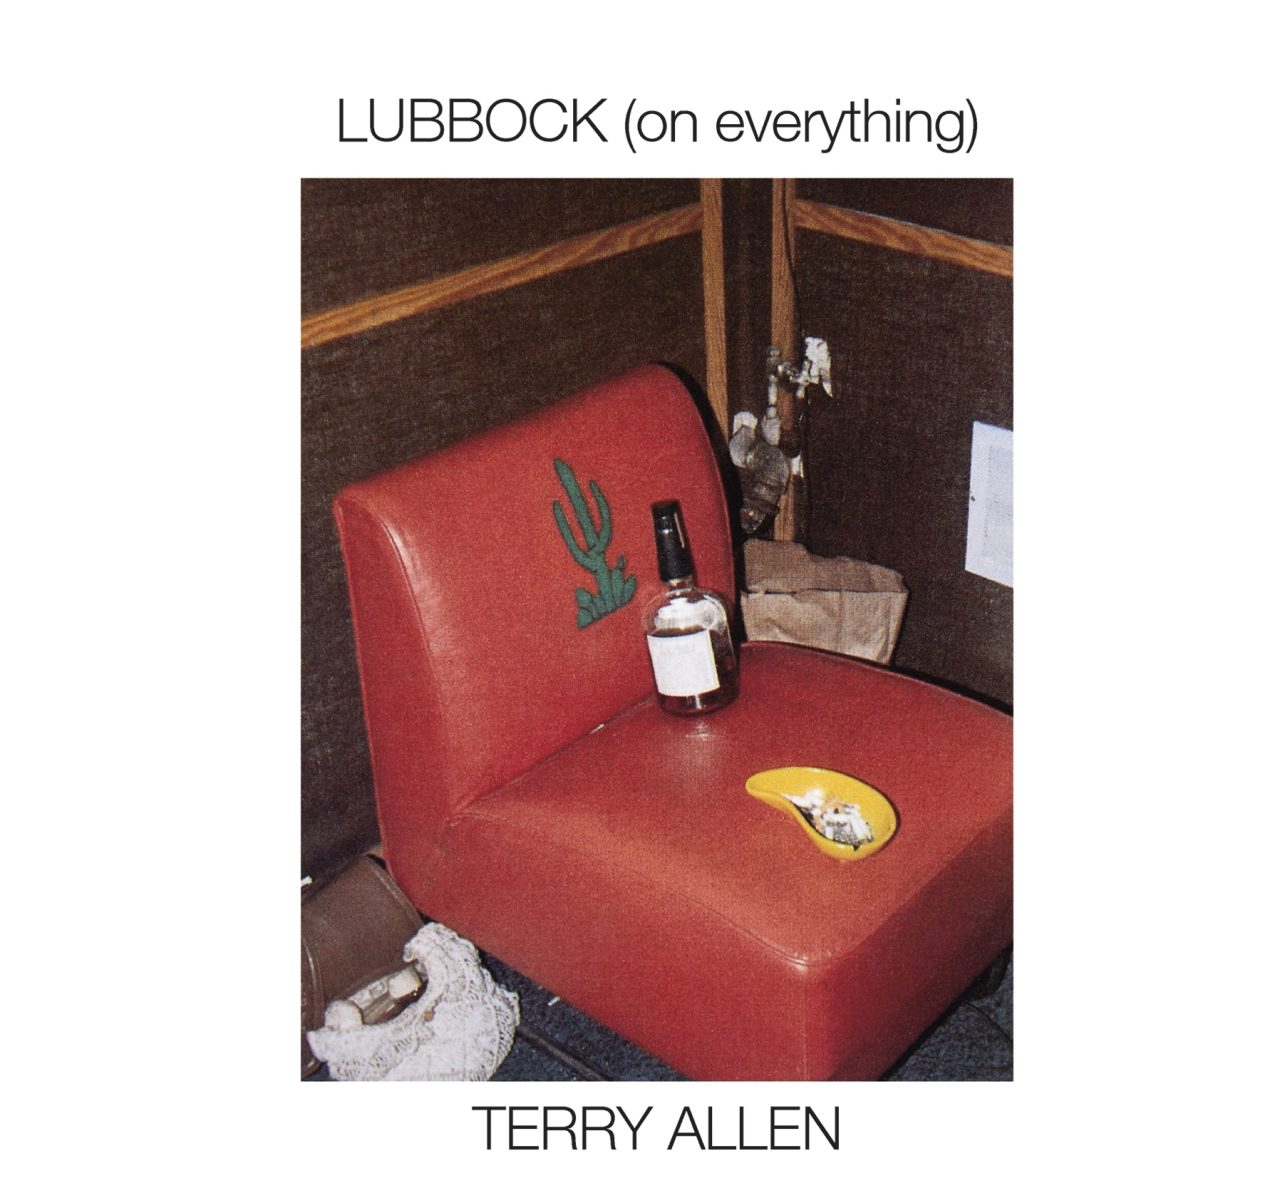 Terry Allen – Lubbock cover album